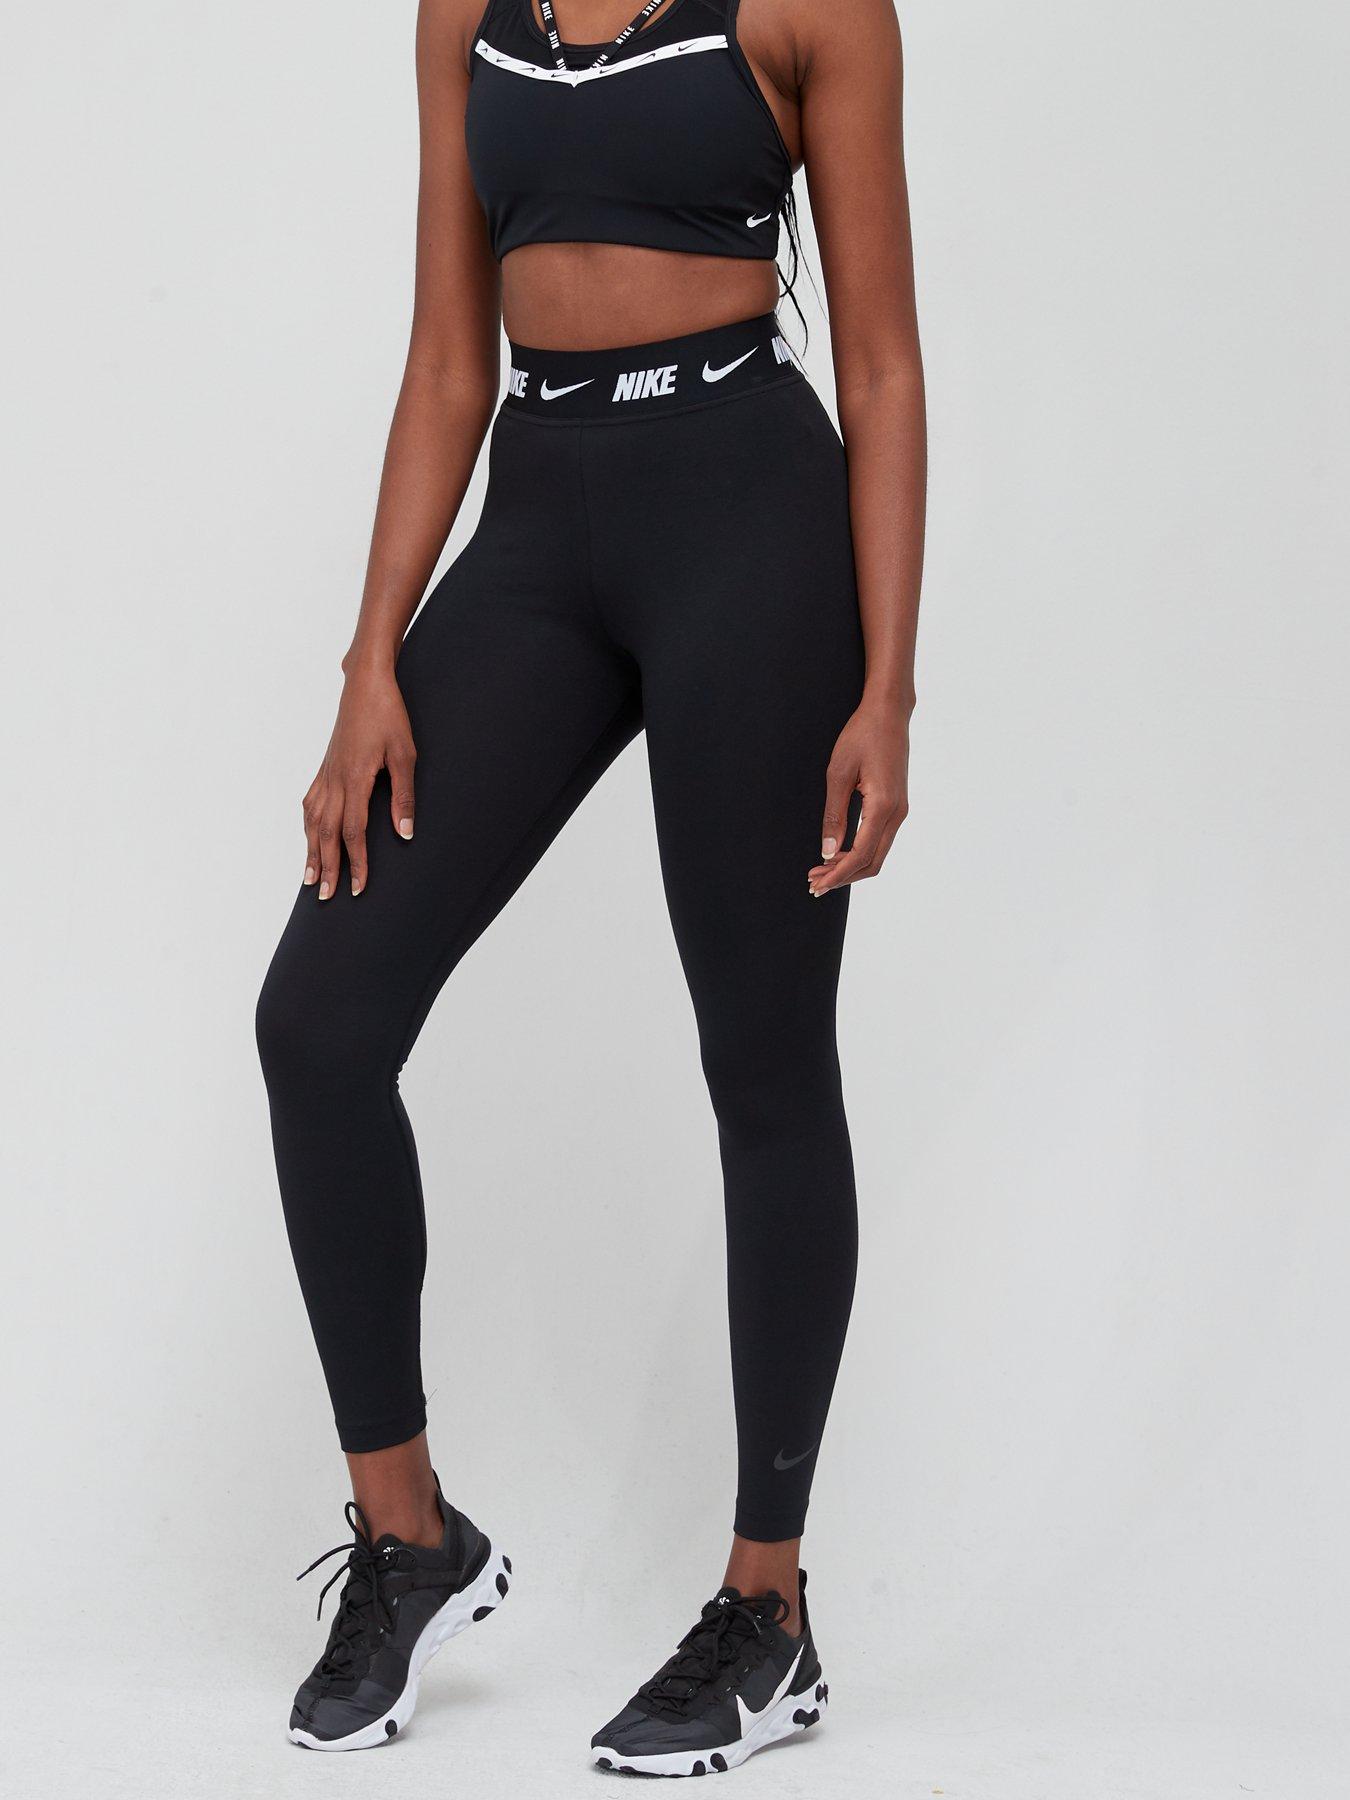 Crivit Leggings Black M discount 75% WOMEN FASHION Trousers Sports 